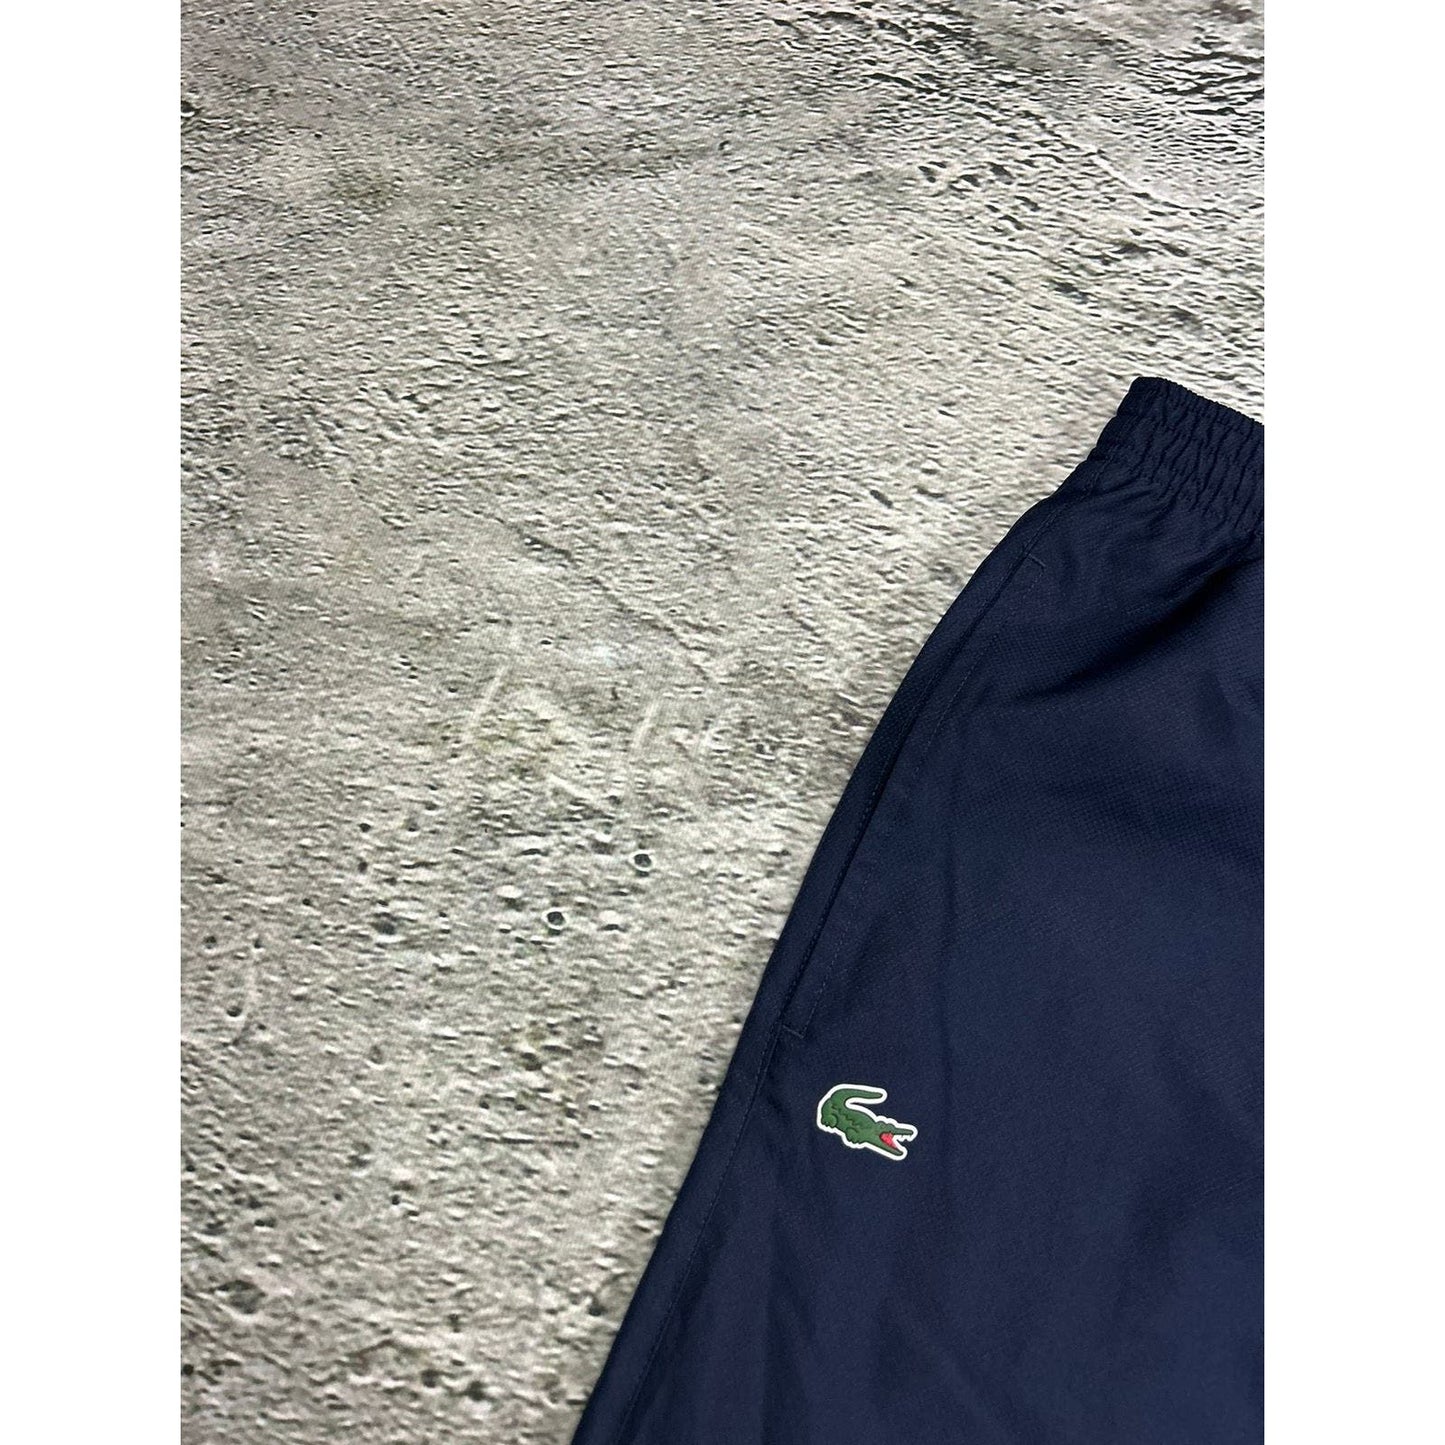 Lacoste track suit vintage navy pants windbreaker small logo